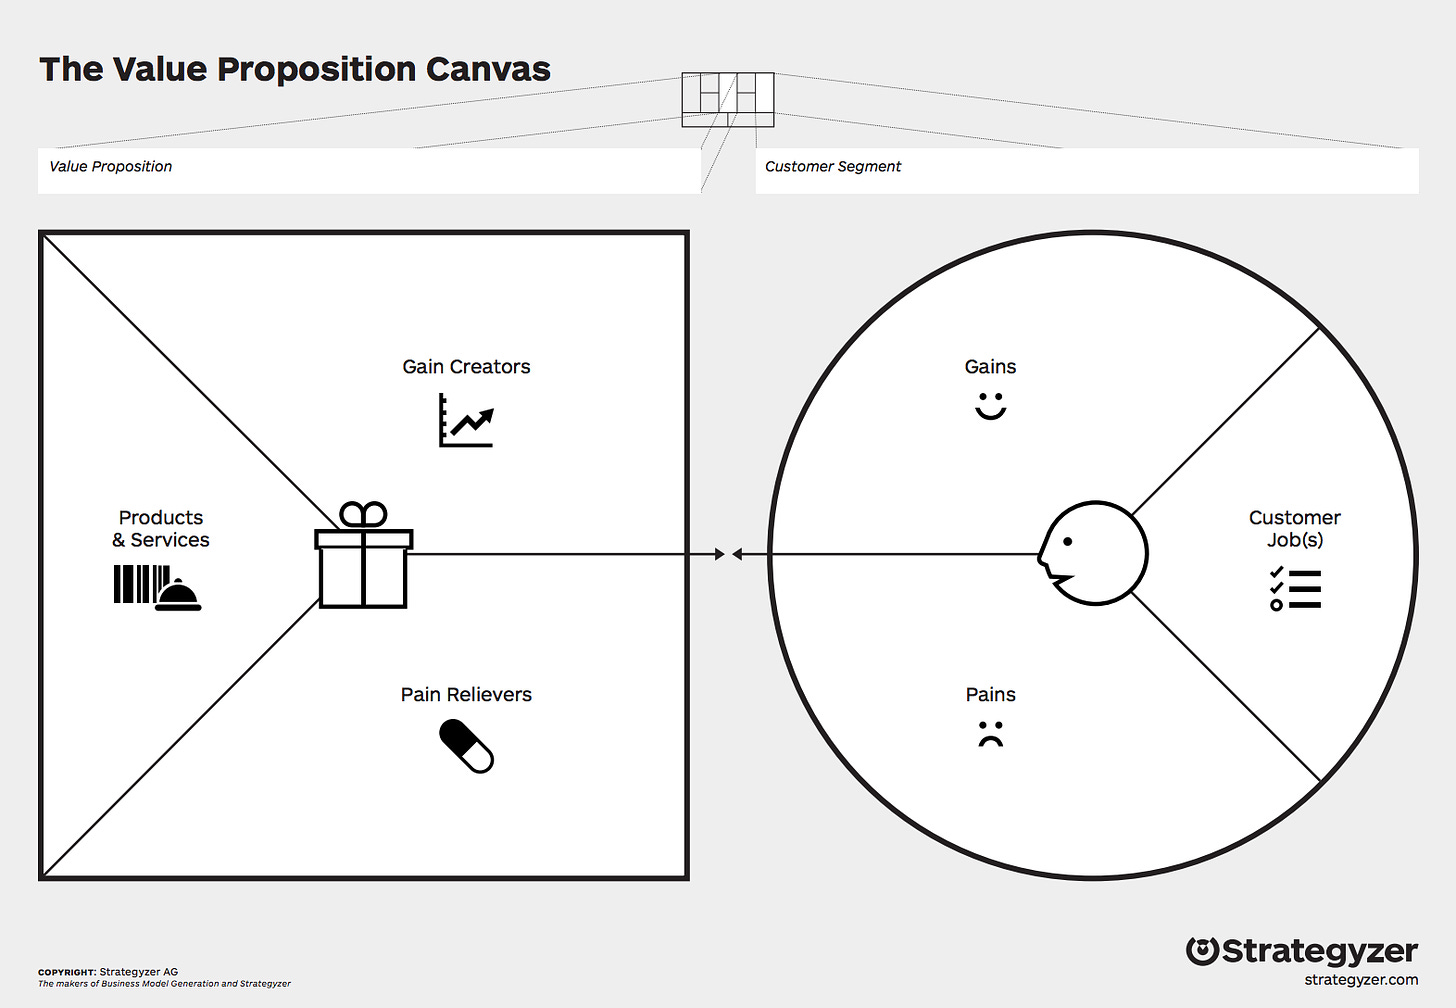 Strategyzer's Value Proposition Canvas